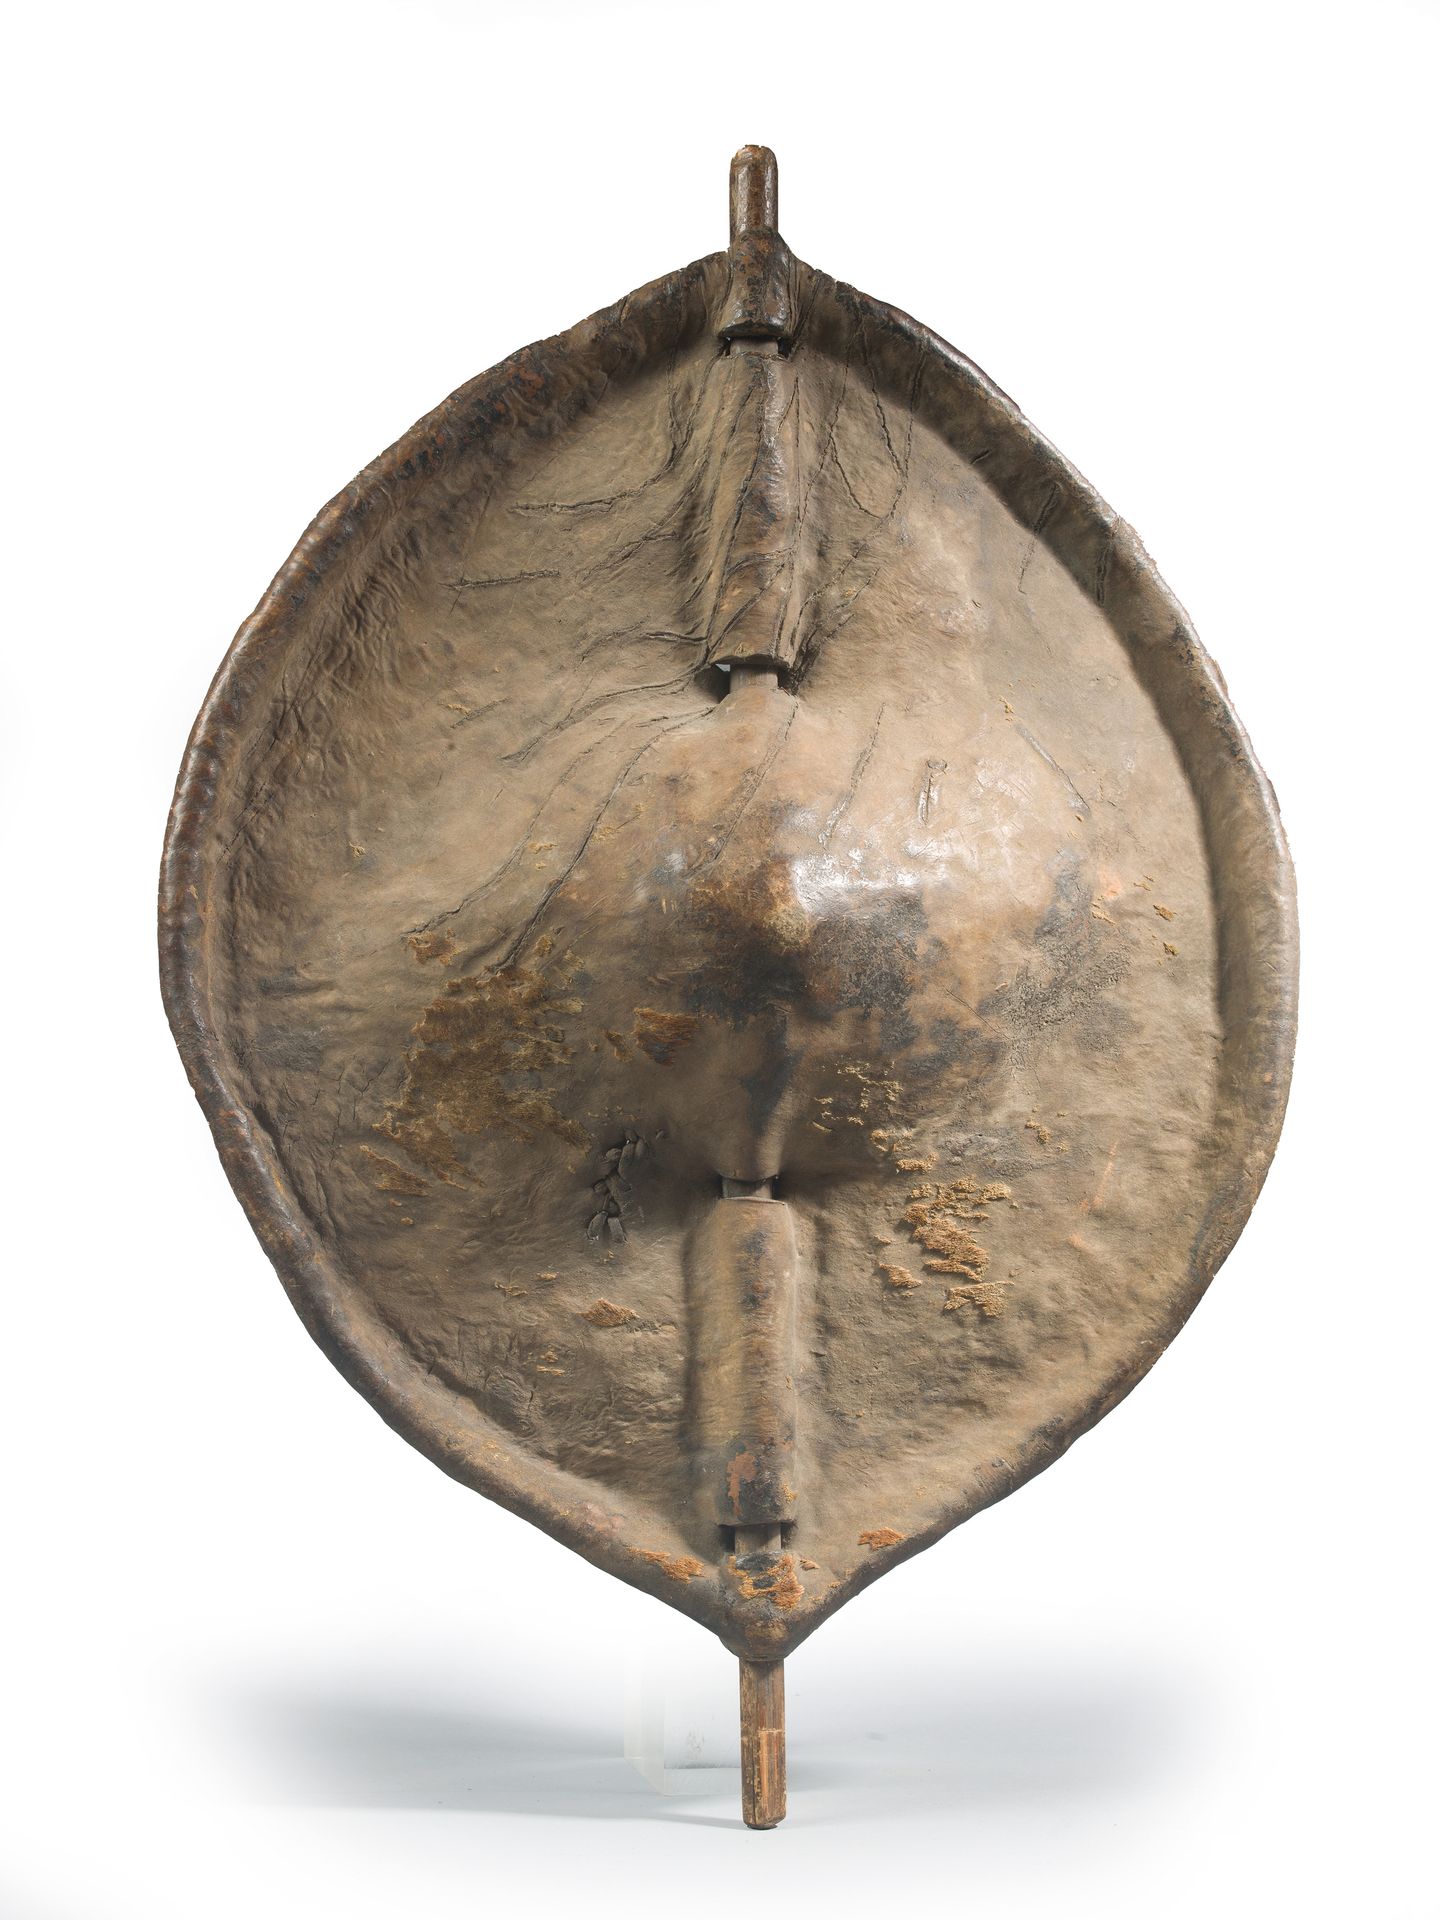 Null CUBO DINKA

Sudán Siglo XIX-XX

Madera y piel

49 x 69 cm